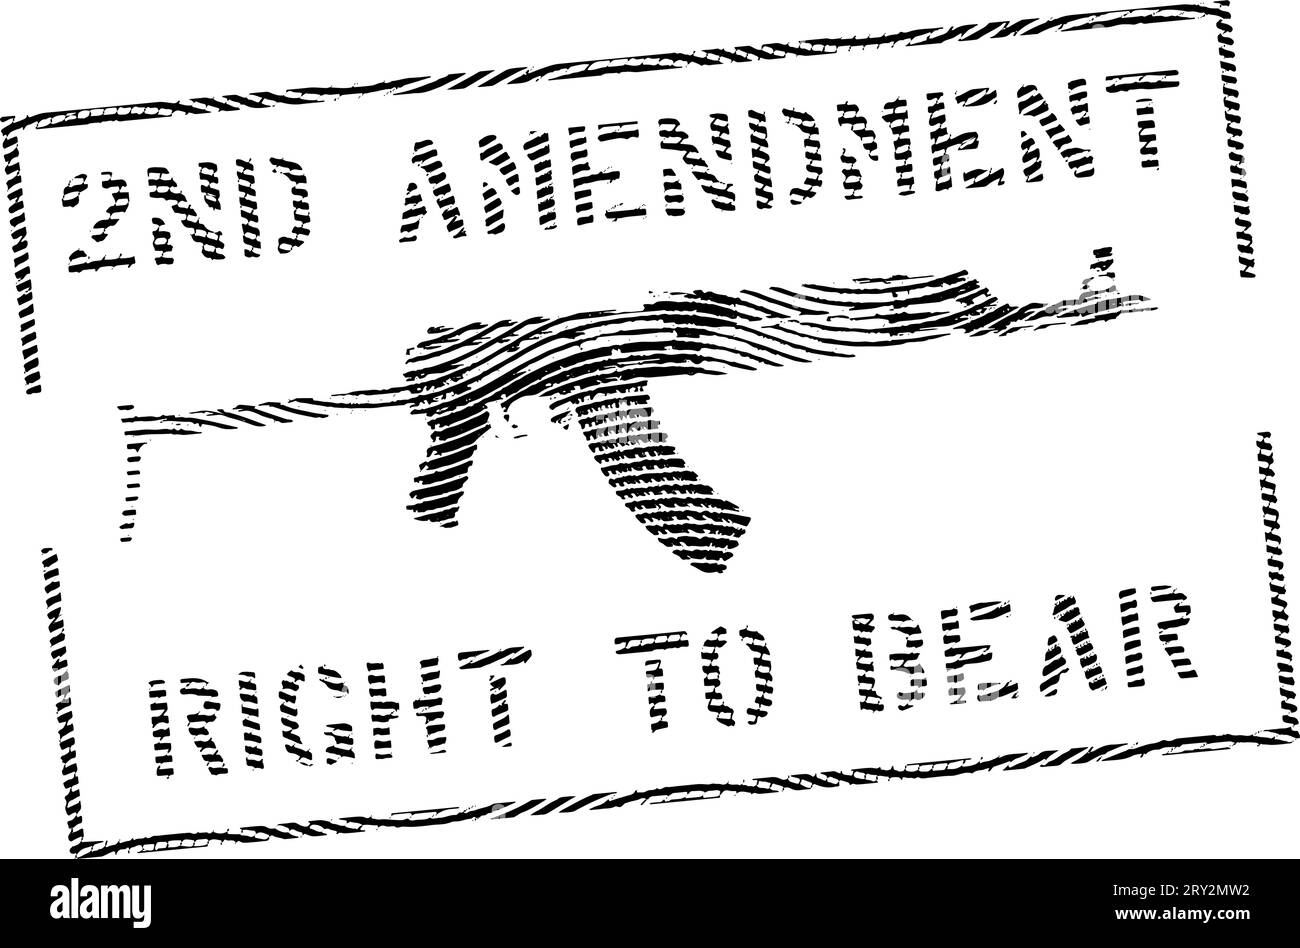 Grunge-Stempel ''Second Amendment-right to Bear''. AK-47 Sturmgewehr. Stock Vektor